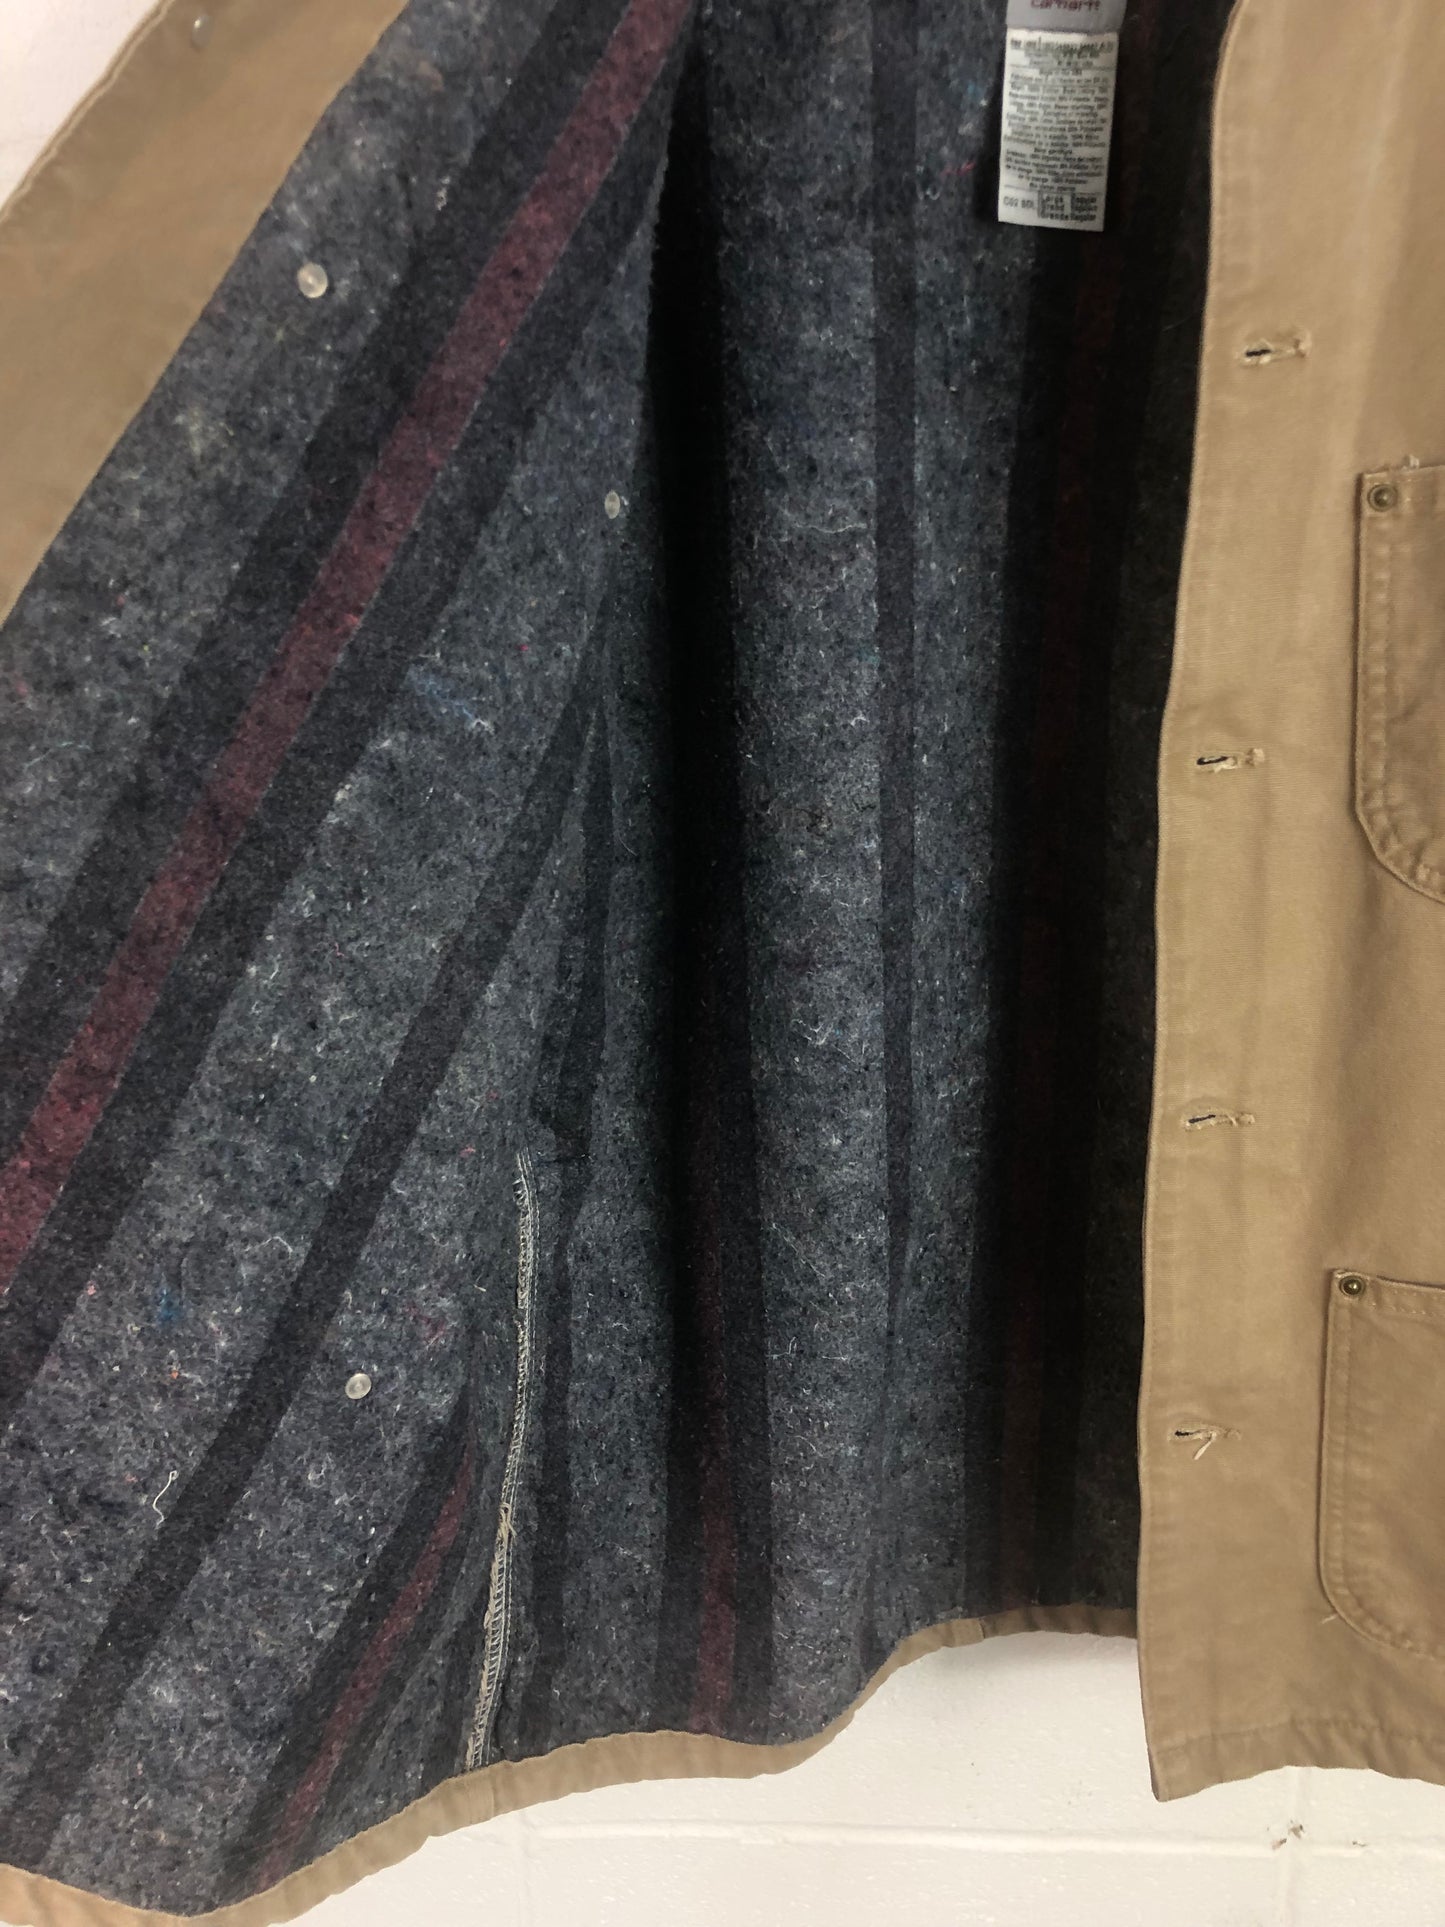 VTG Carhartt Wool Lined Corduroy Collar Jacket sz L/XL